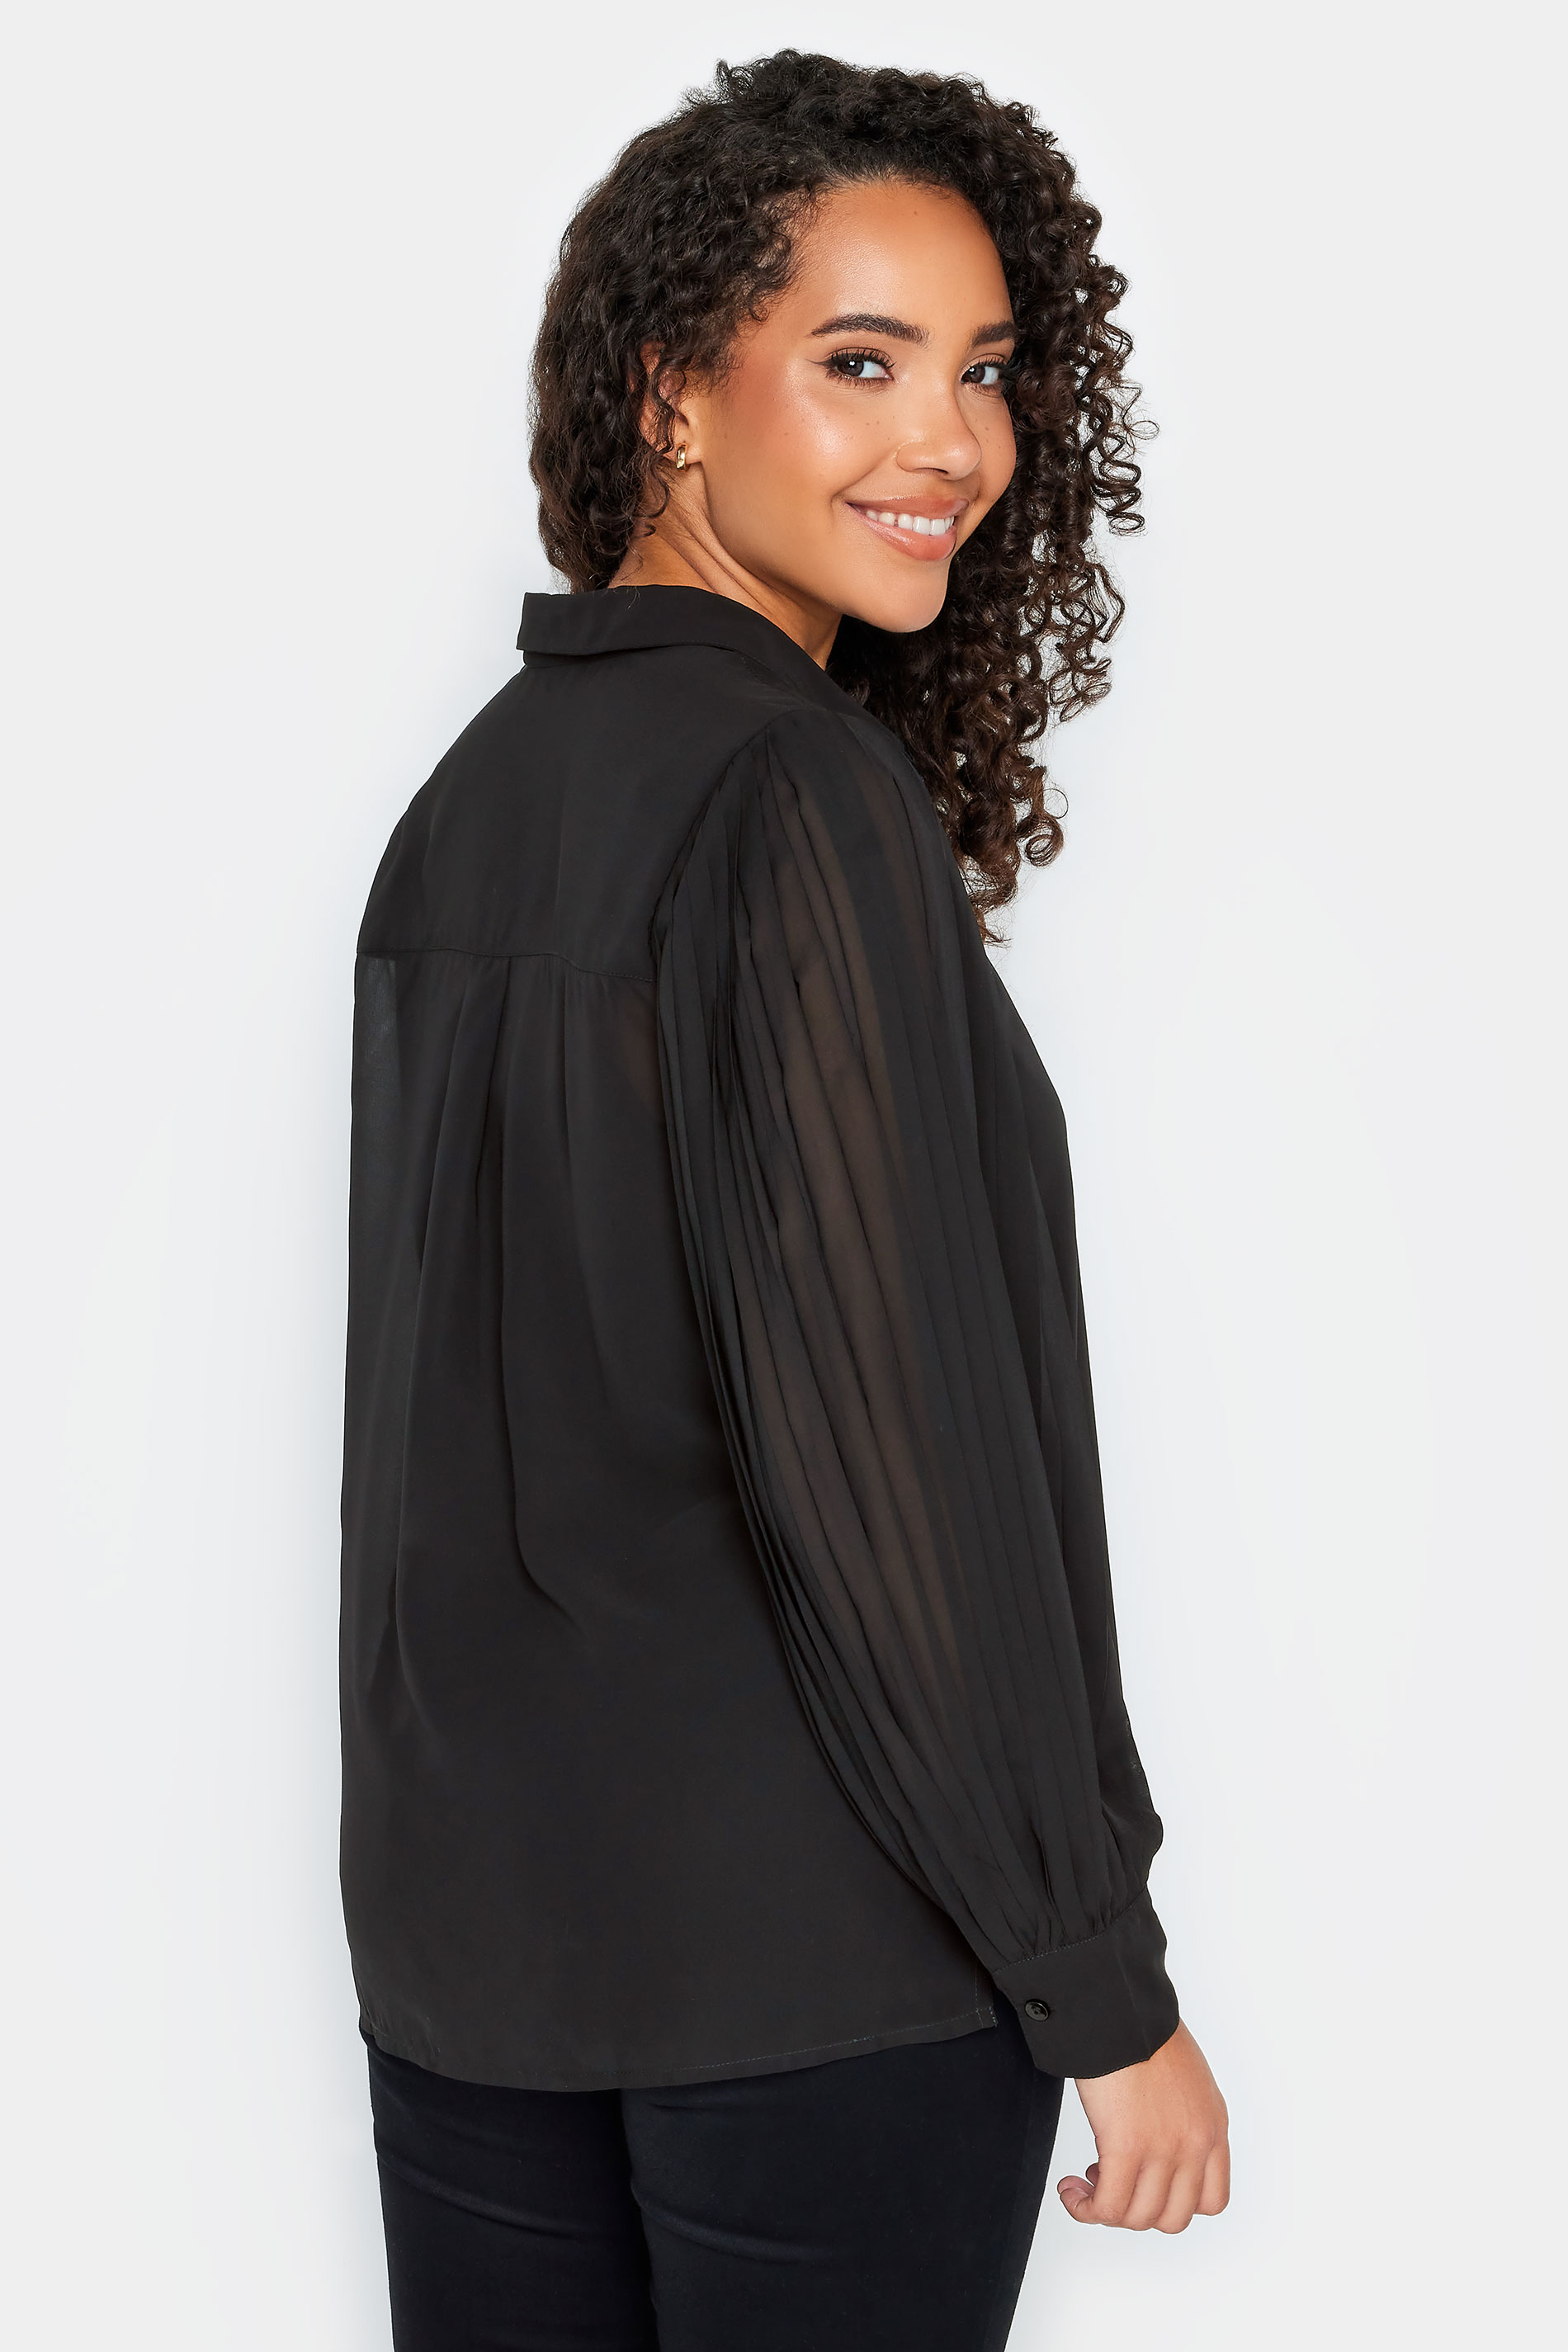 M&Co Black Pleat Sleeve Shirt | M&Co 3